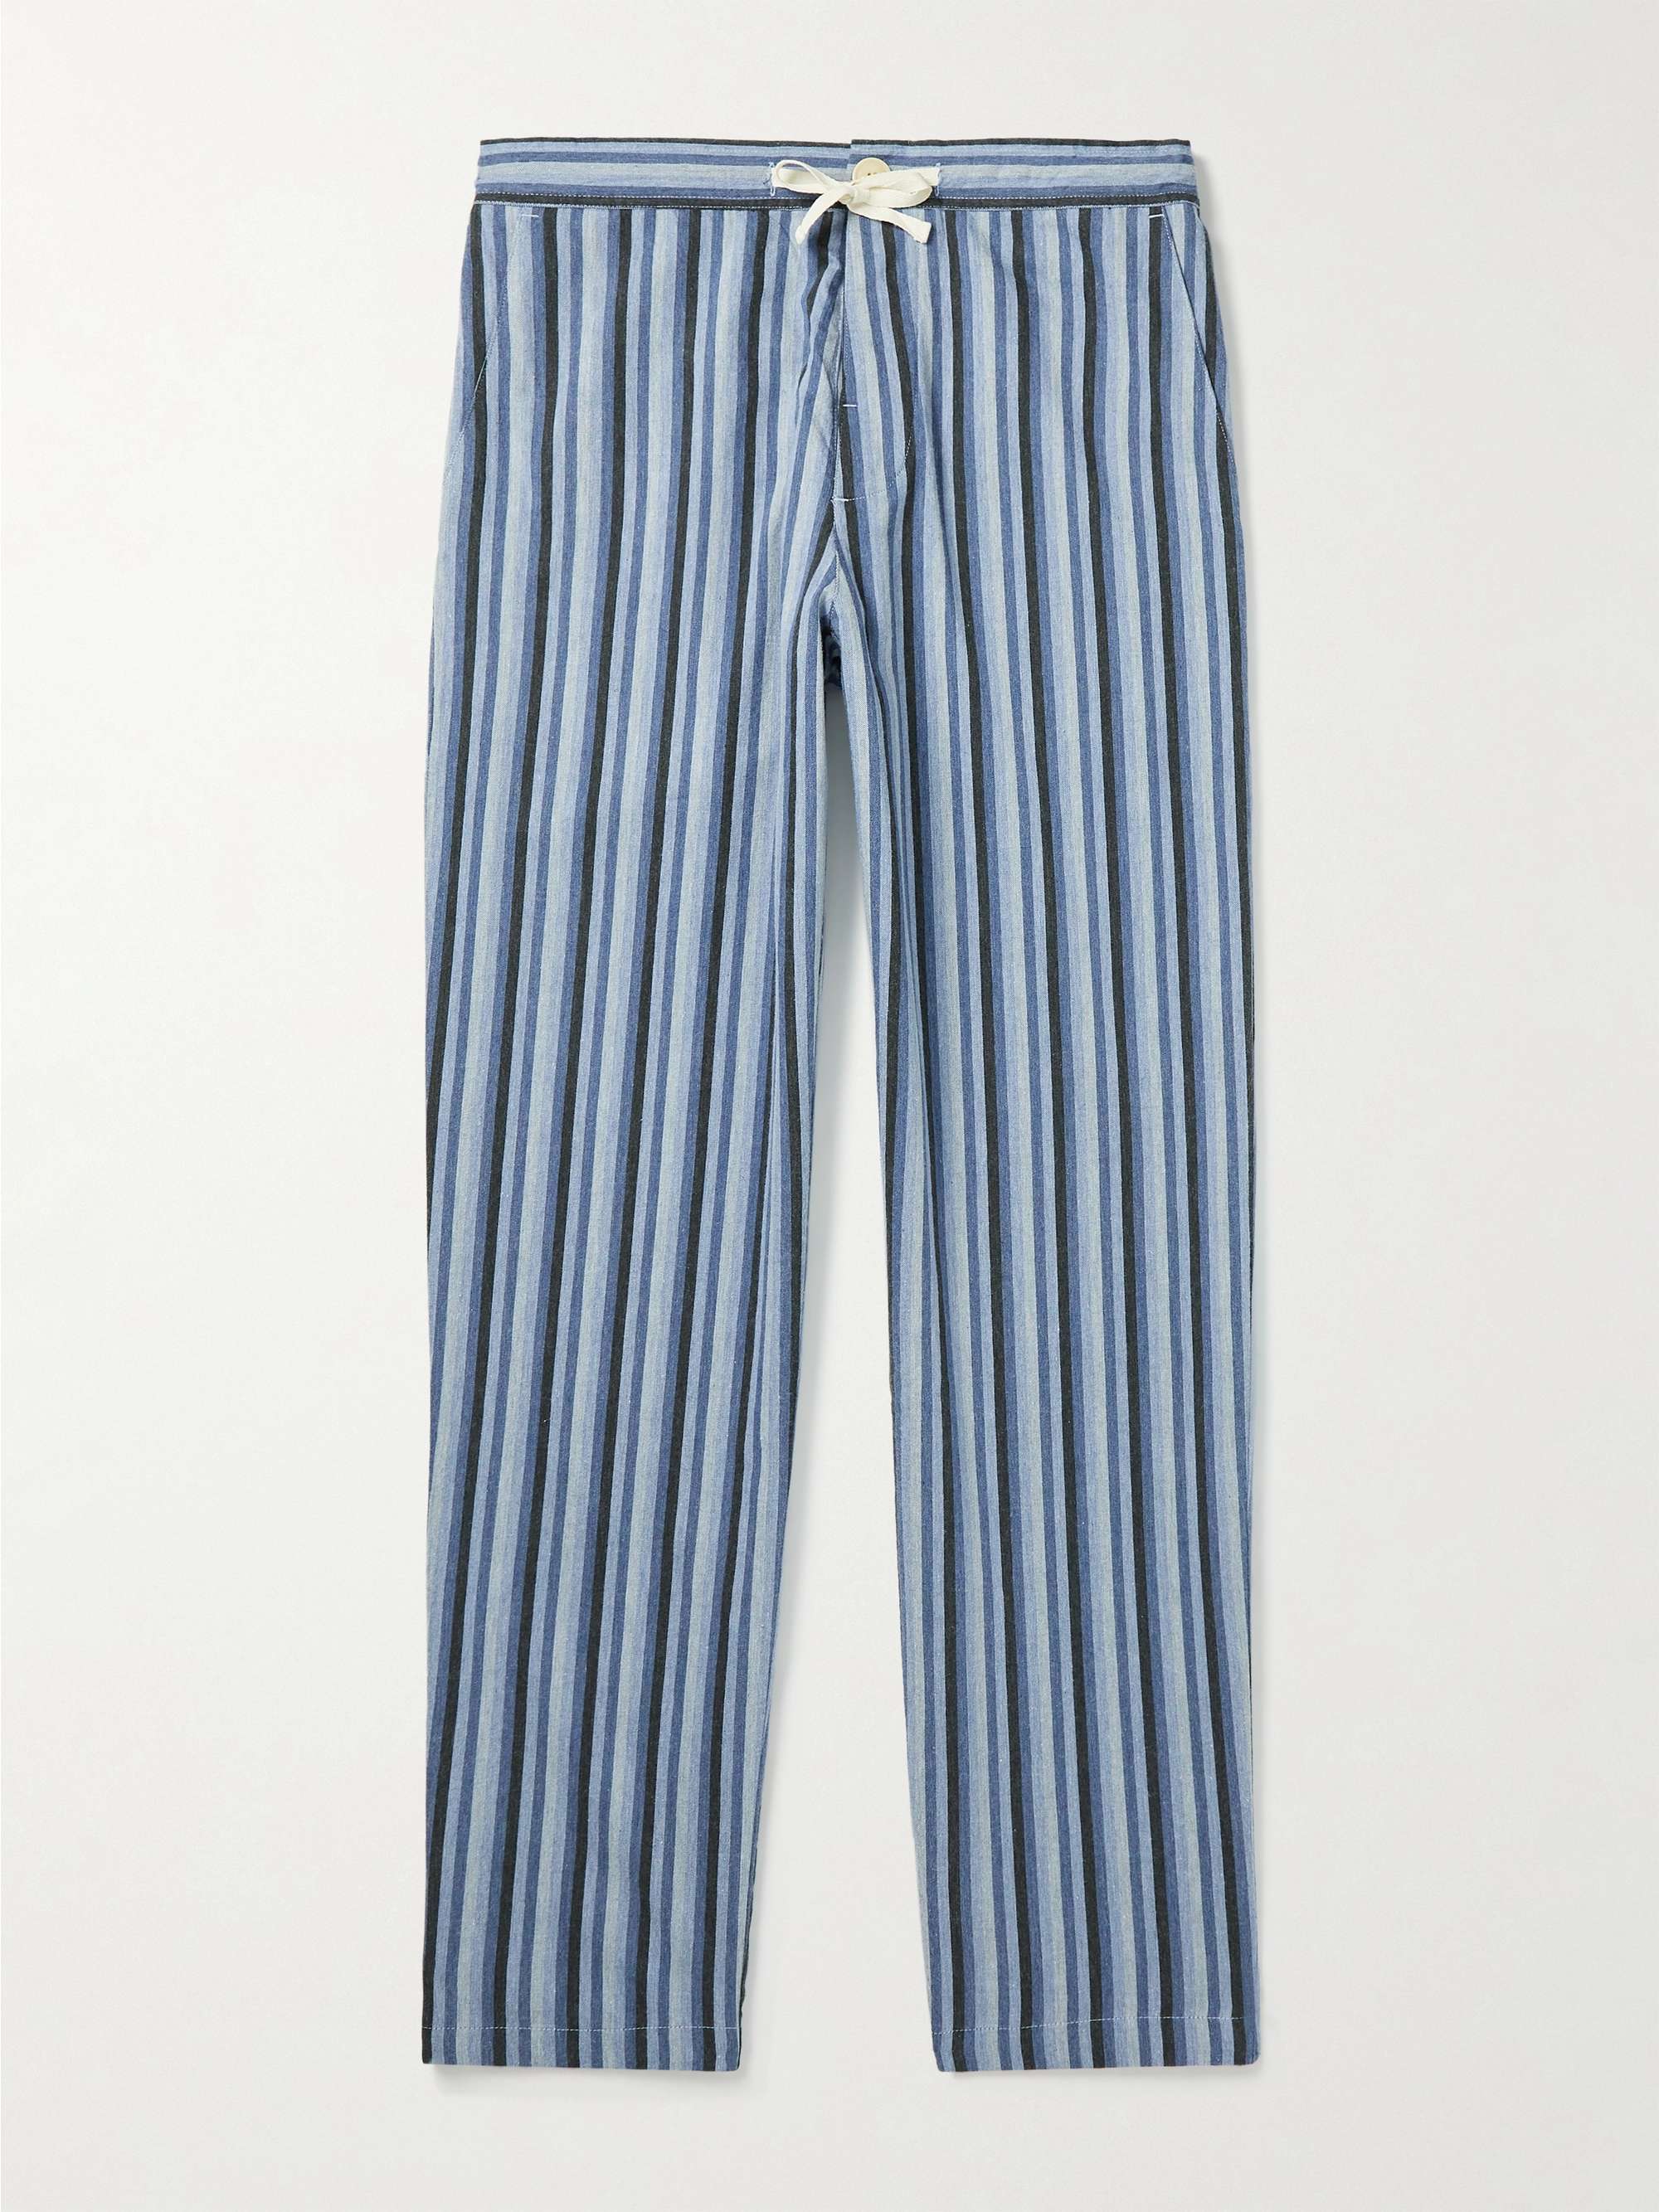 OLIVER SPENCER LOUNGEWEAR Striped Cotton Pyjama Trousers